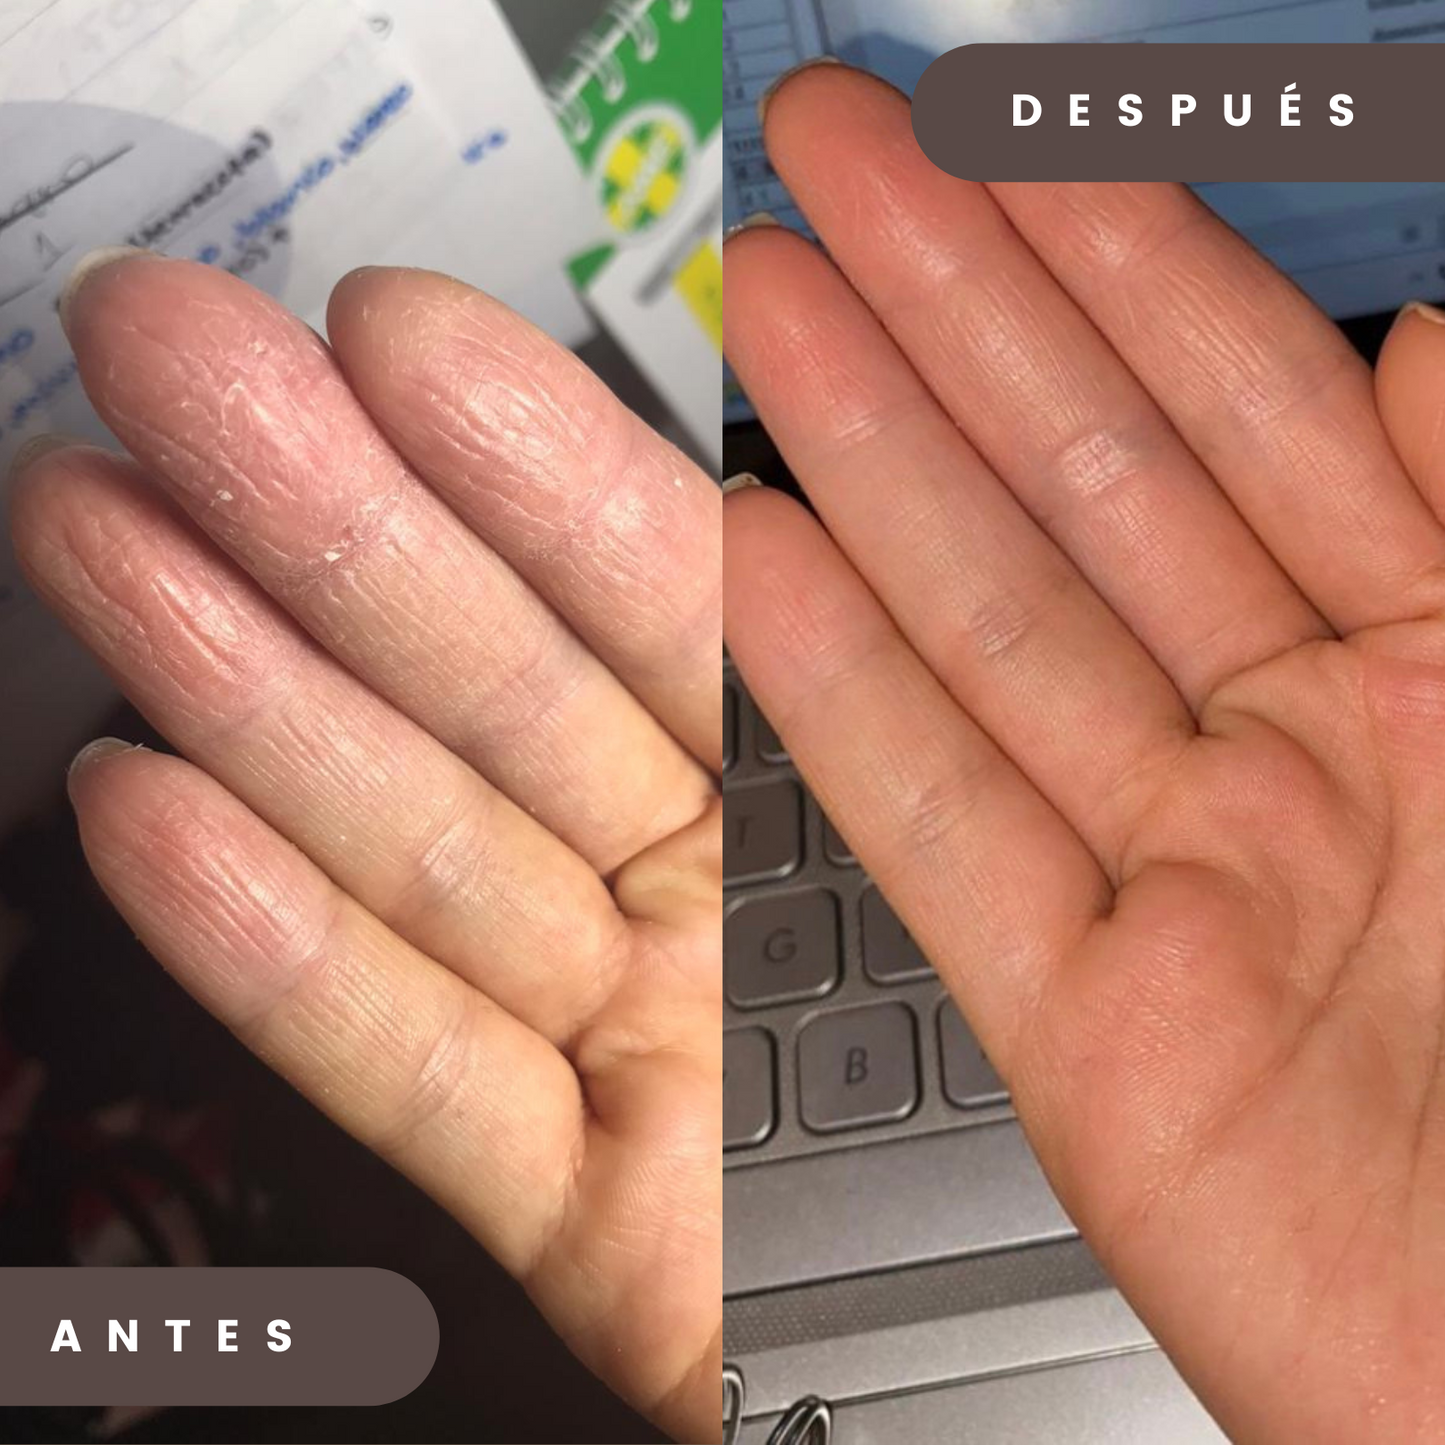 Kit Dermatitis o Resequedad